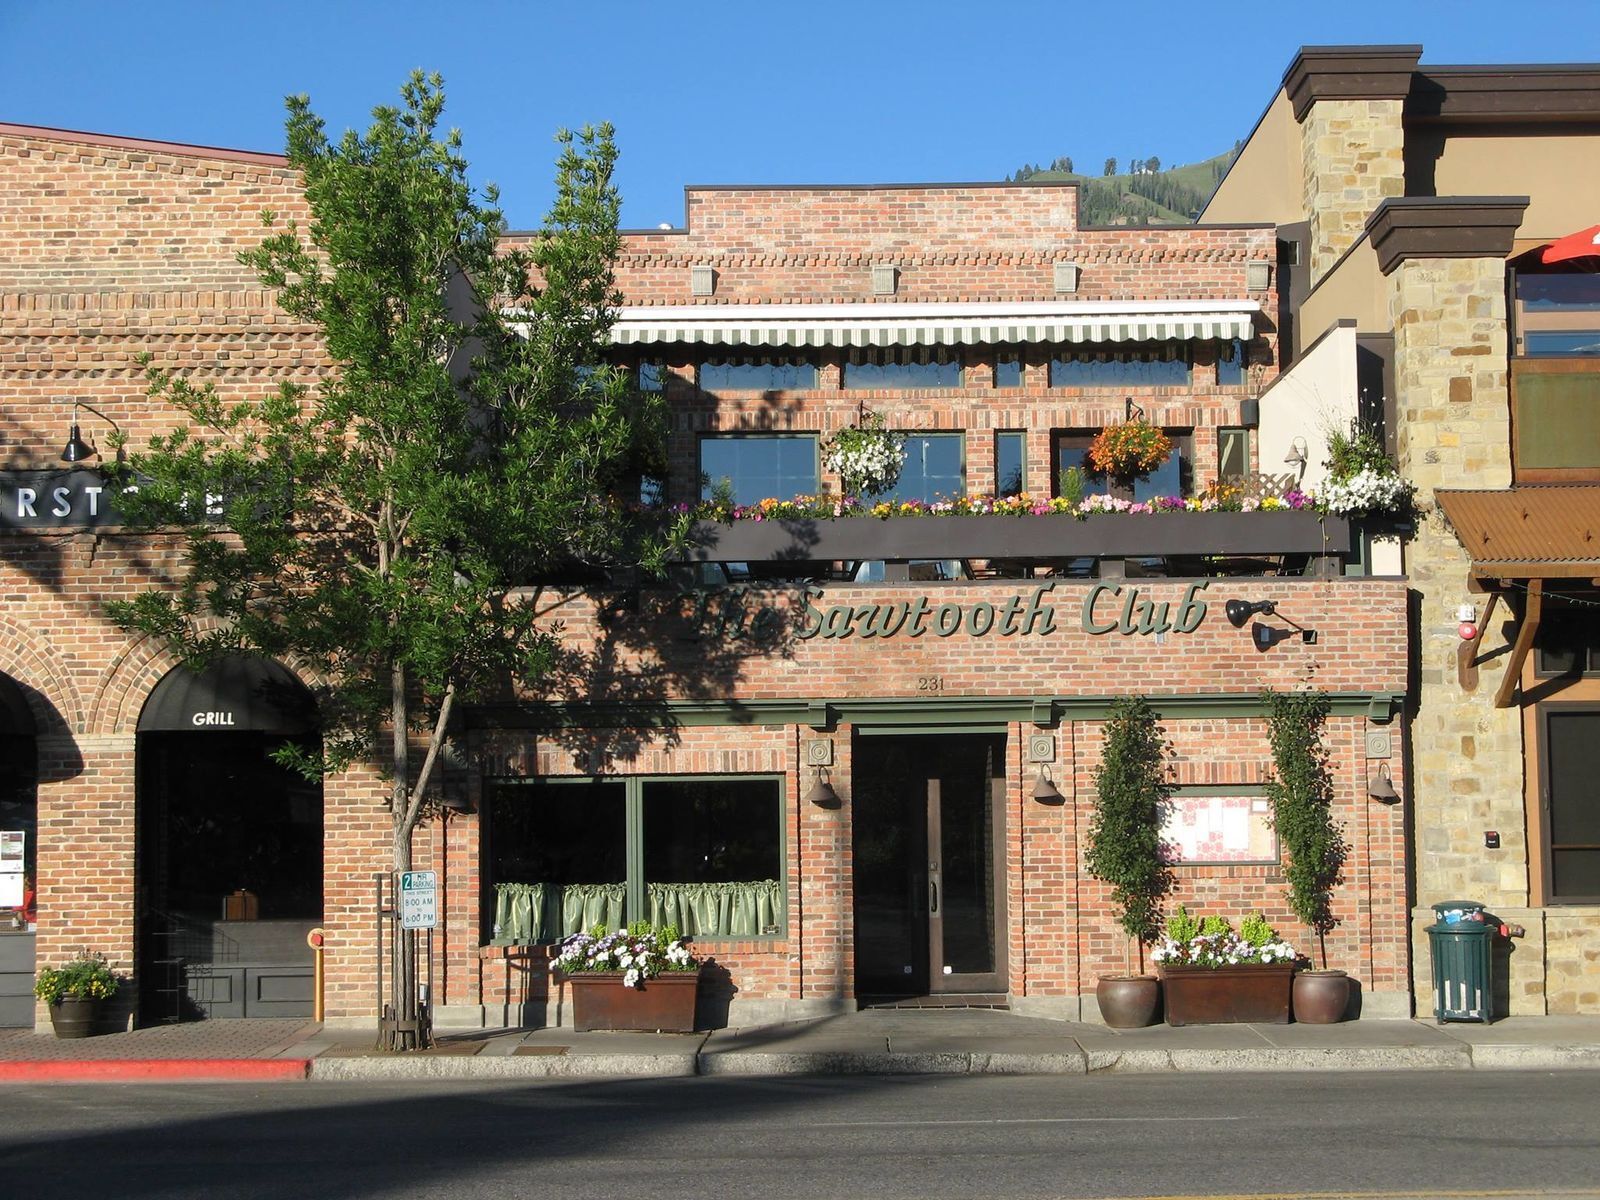 The exterior of the Sawtooth Club